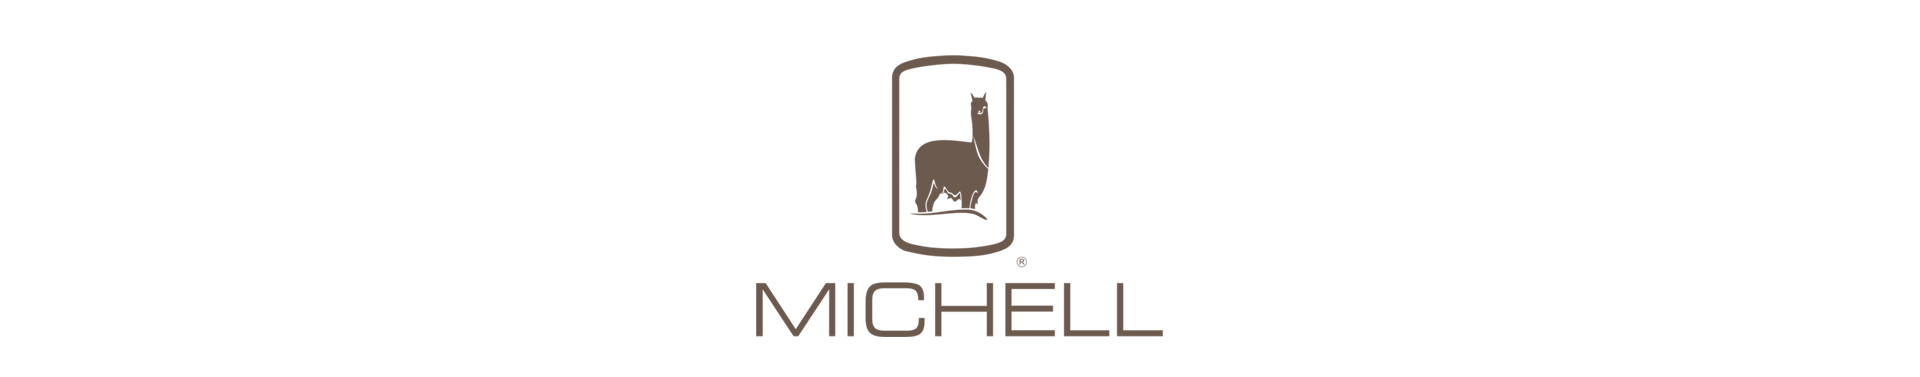 Michell